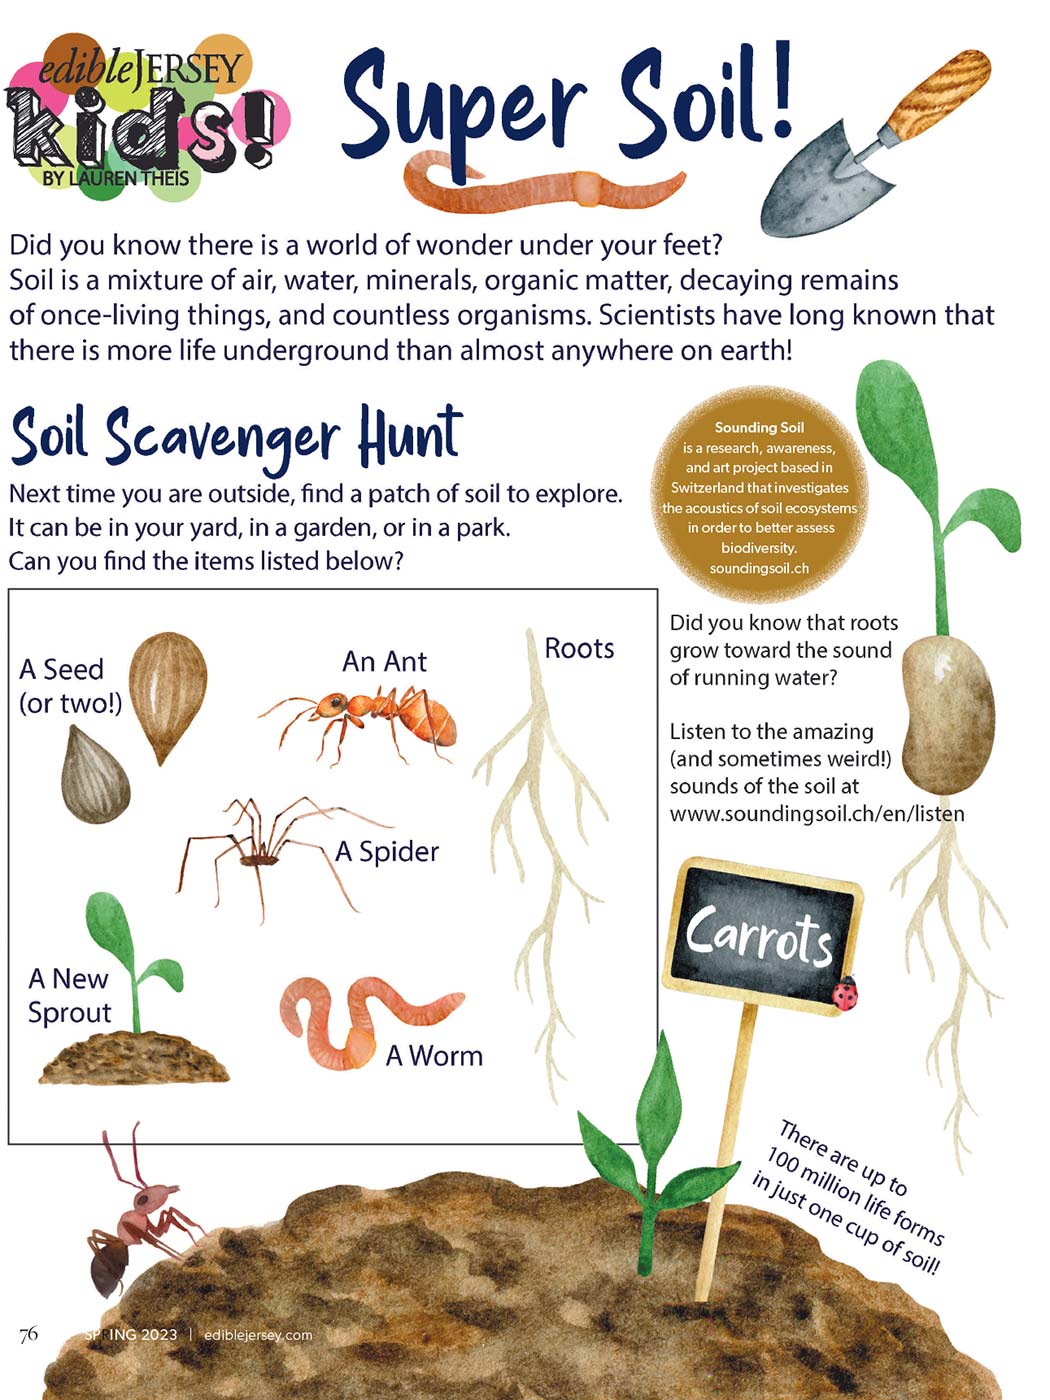 Facts about Super Soil